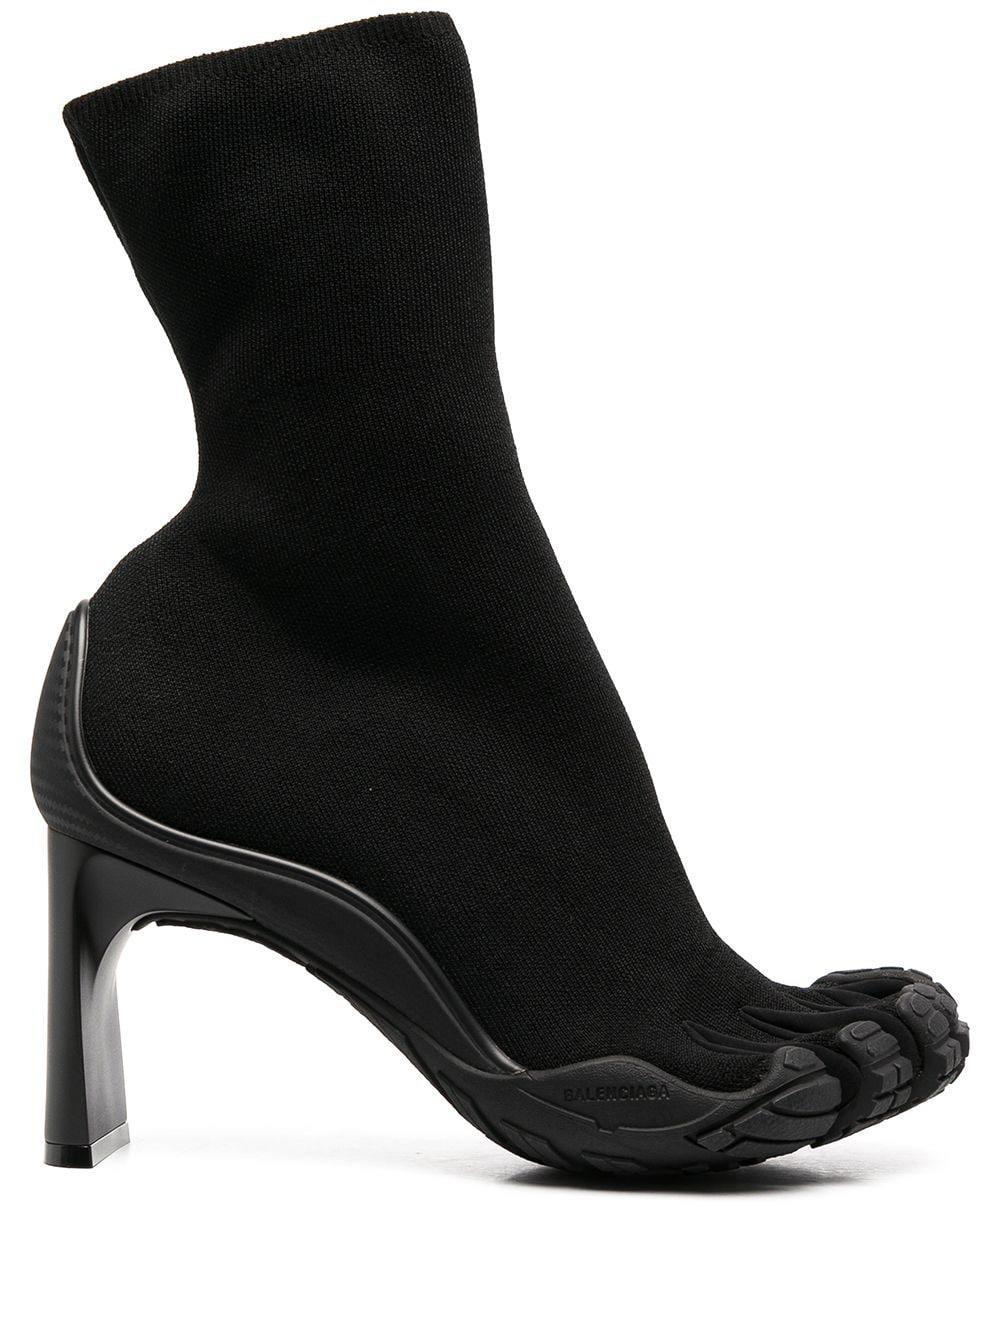 Balenciaga Split-toe Pull-on Booties in Black | Lyst